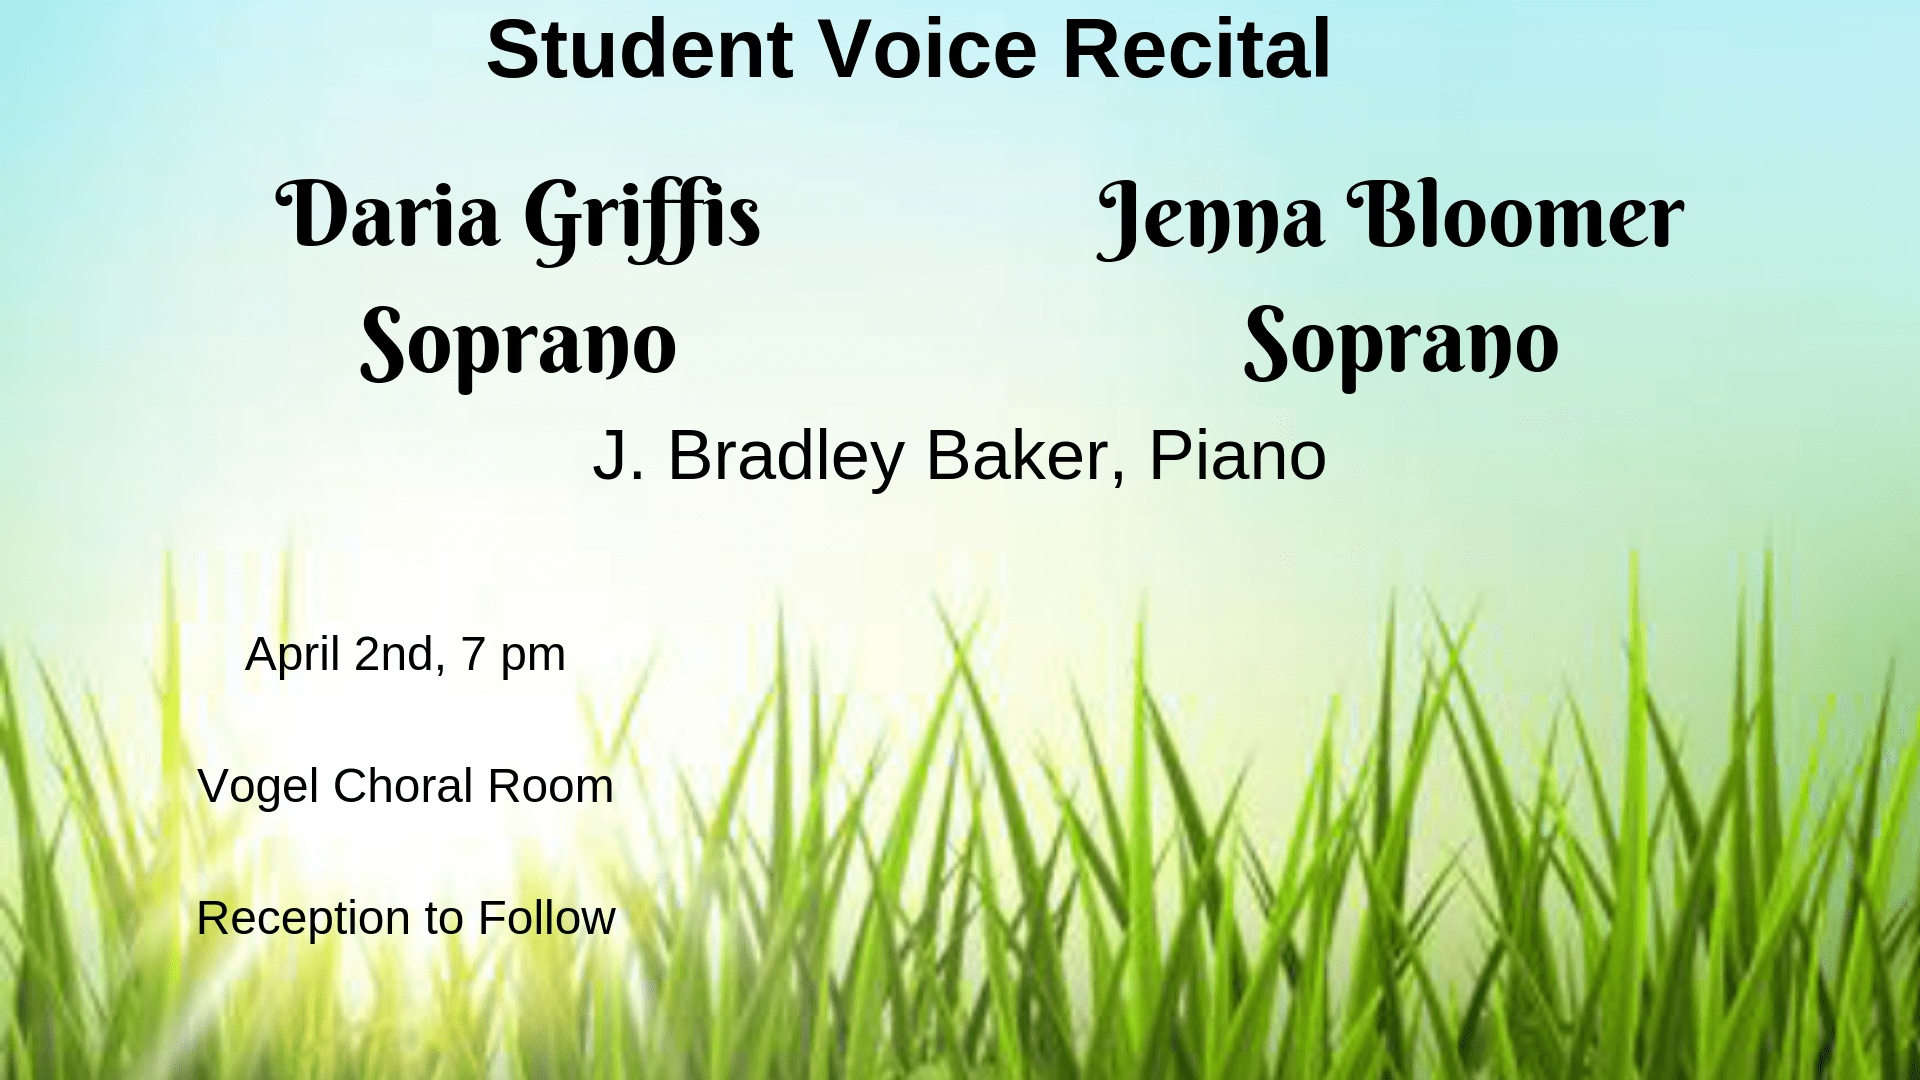 Student Voice Recital concert poster